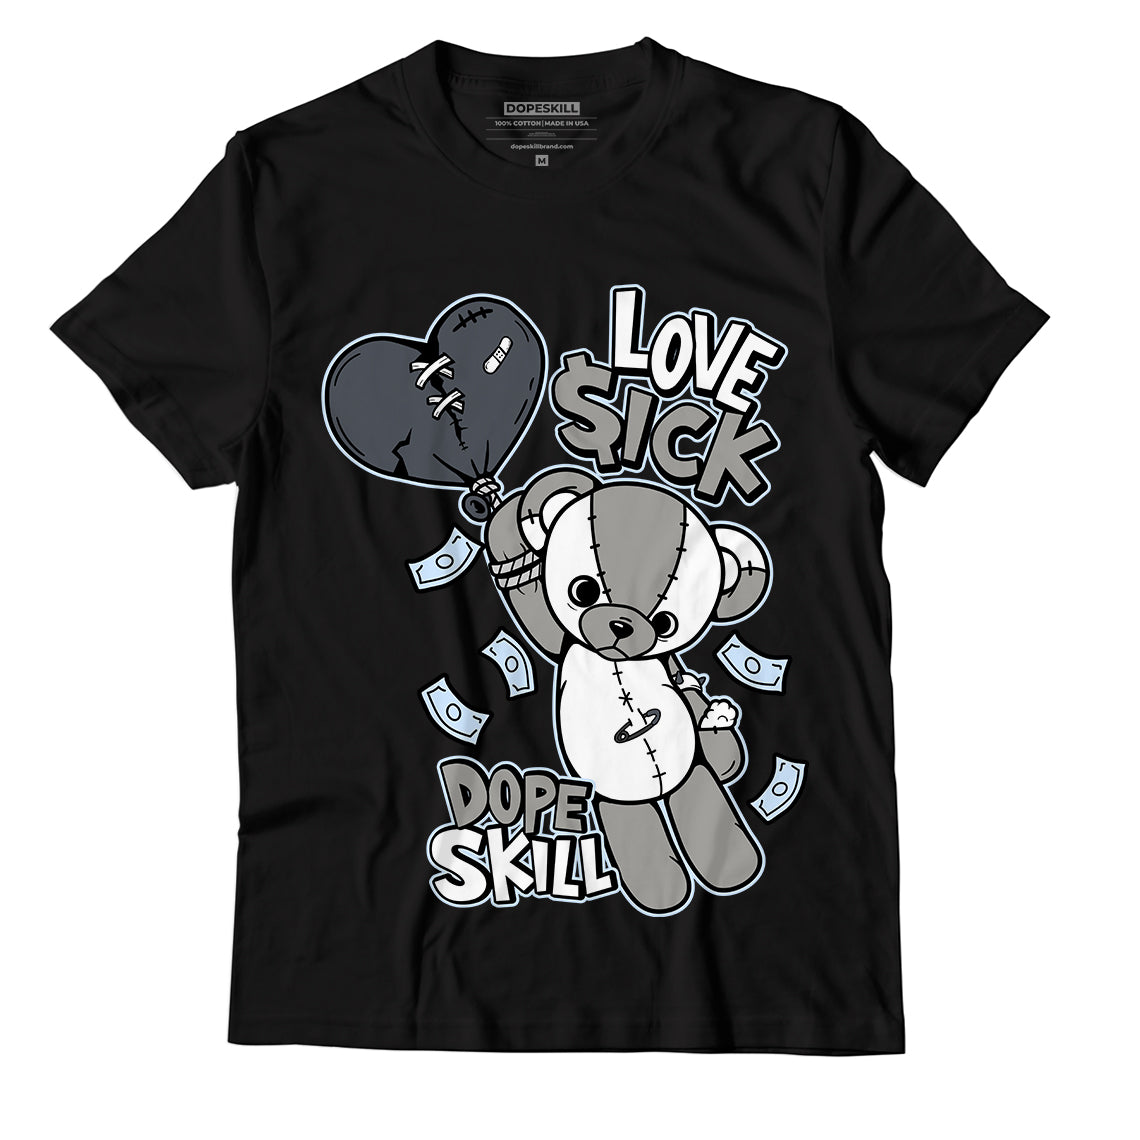 Jordan 11 Cool Grey DopeSkill T-Shirt Love Sick Graphic, hiphop tees, grey graphic tees, sneakers match shirt - Black